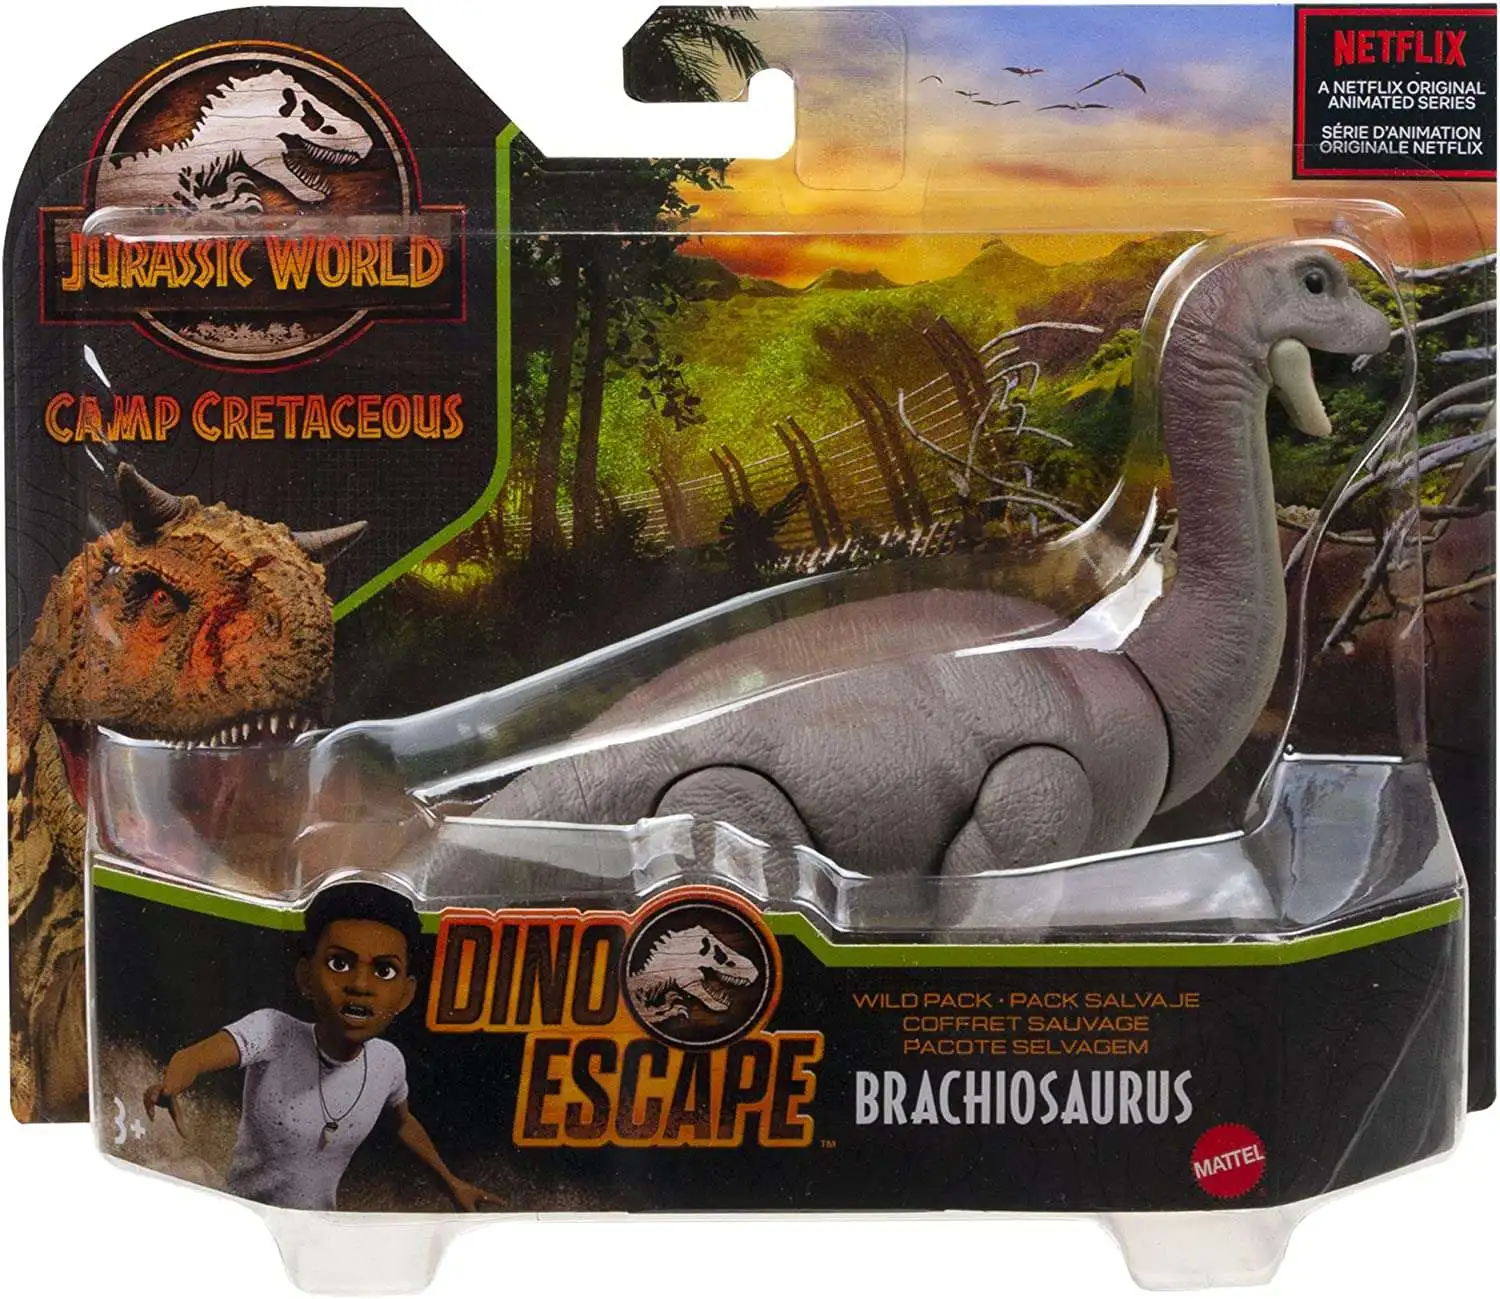 Jurassic World Camp Cretaceous Dino Escape Wild Pack Brachiosaurus 